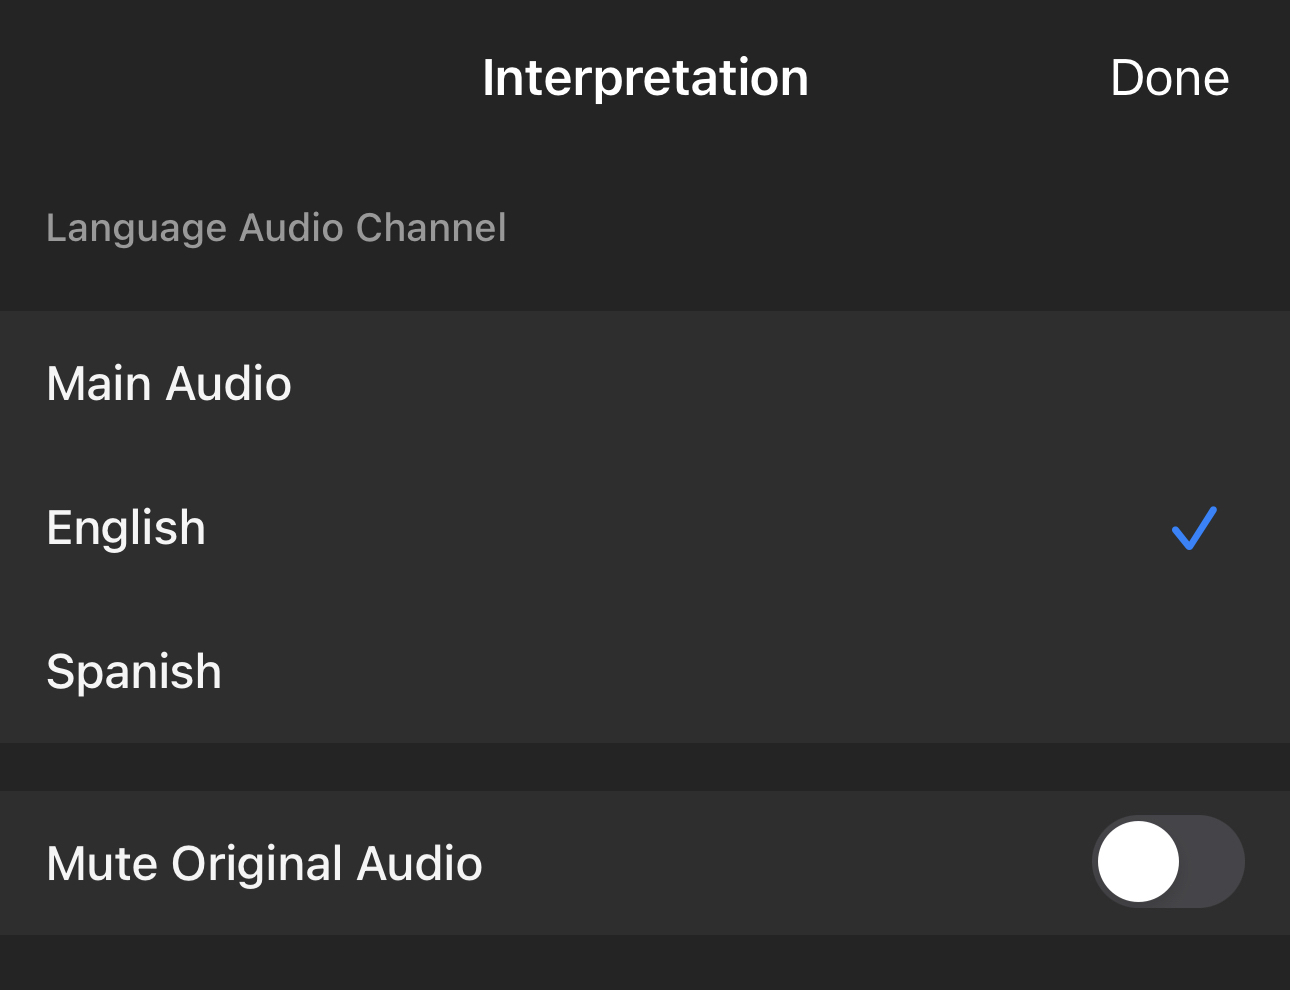 Zoom interpretation interface - language settings